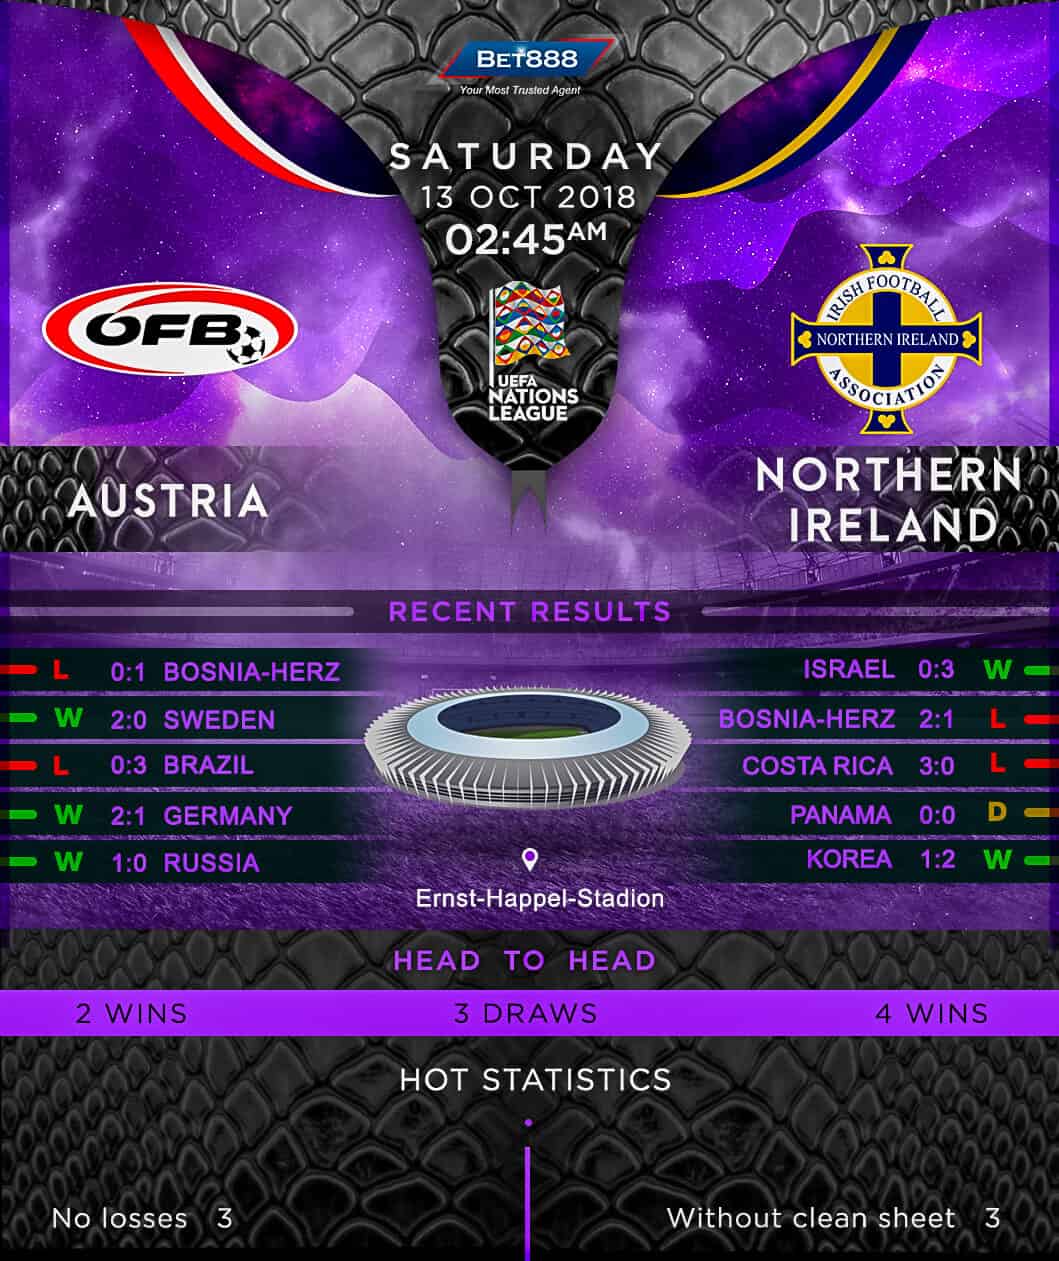 Austria vs Northern Ireland 13/10/18